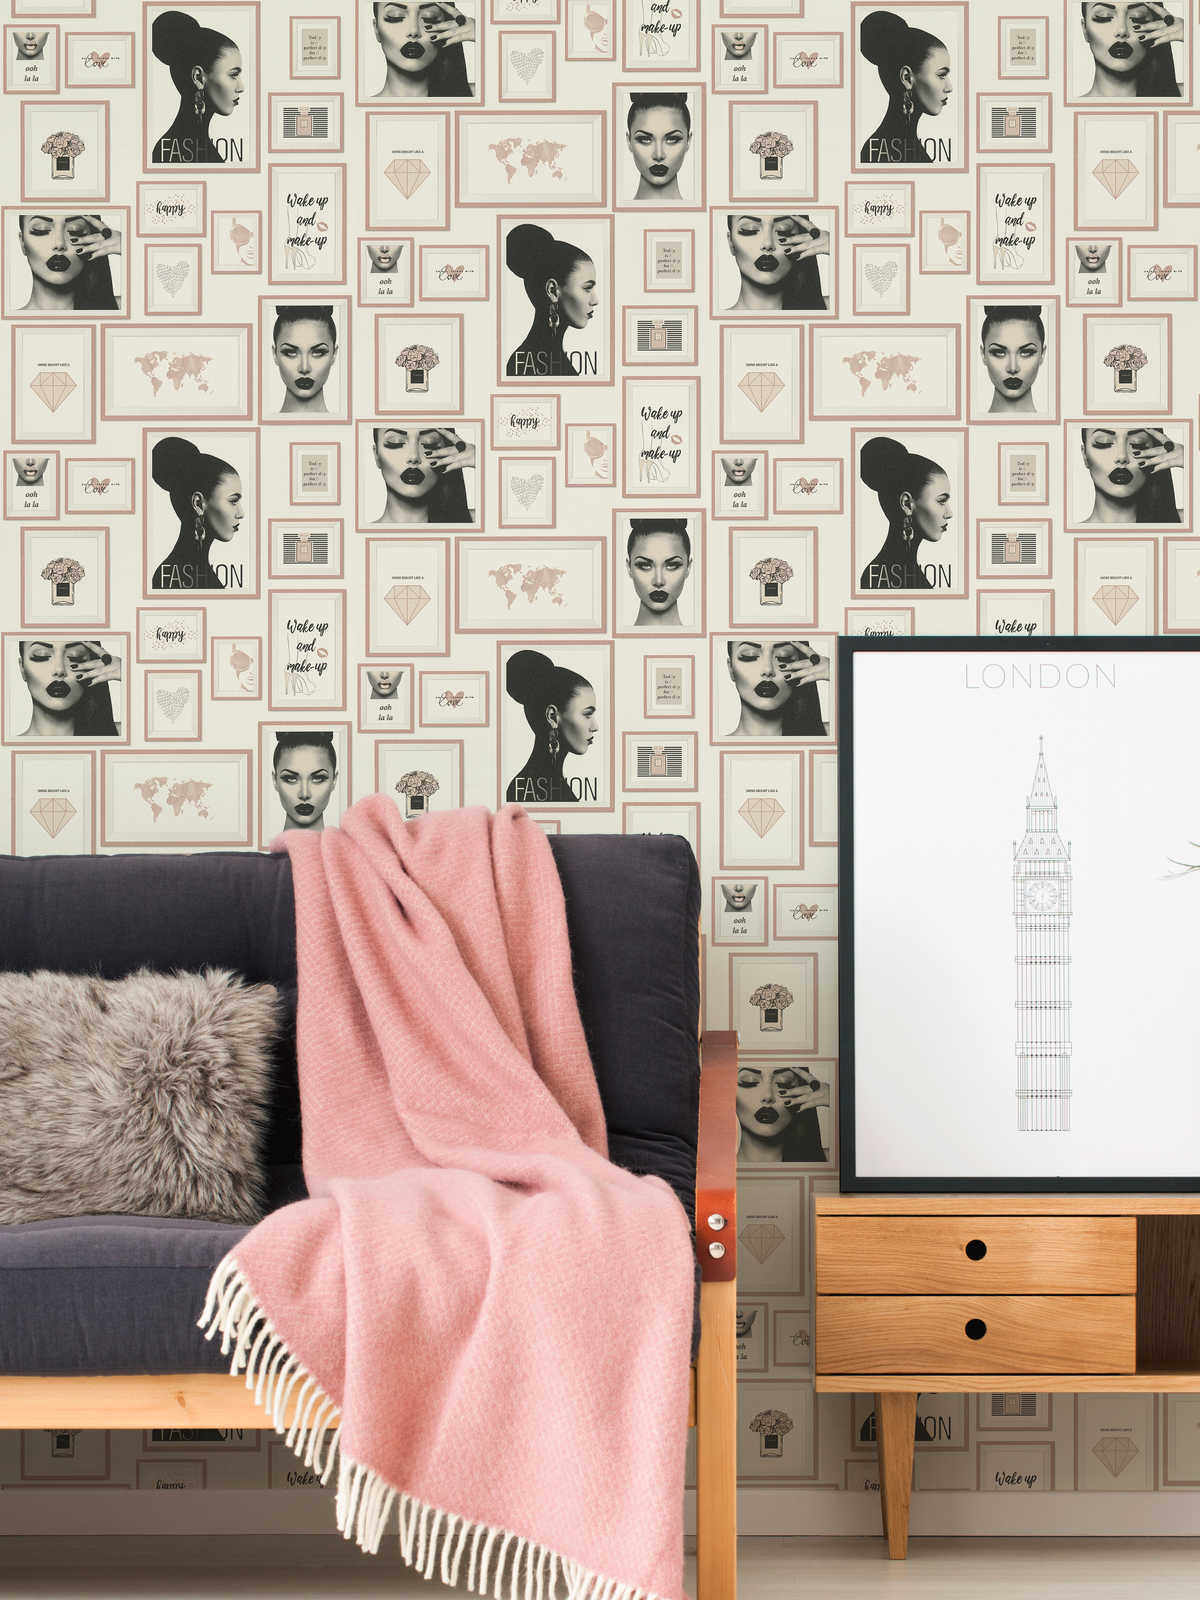             Wallpaper Fashion Design with wall decor - pink, black, white
        